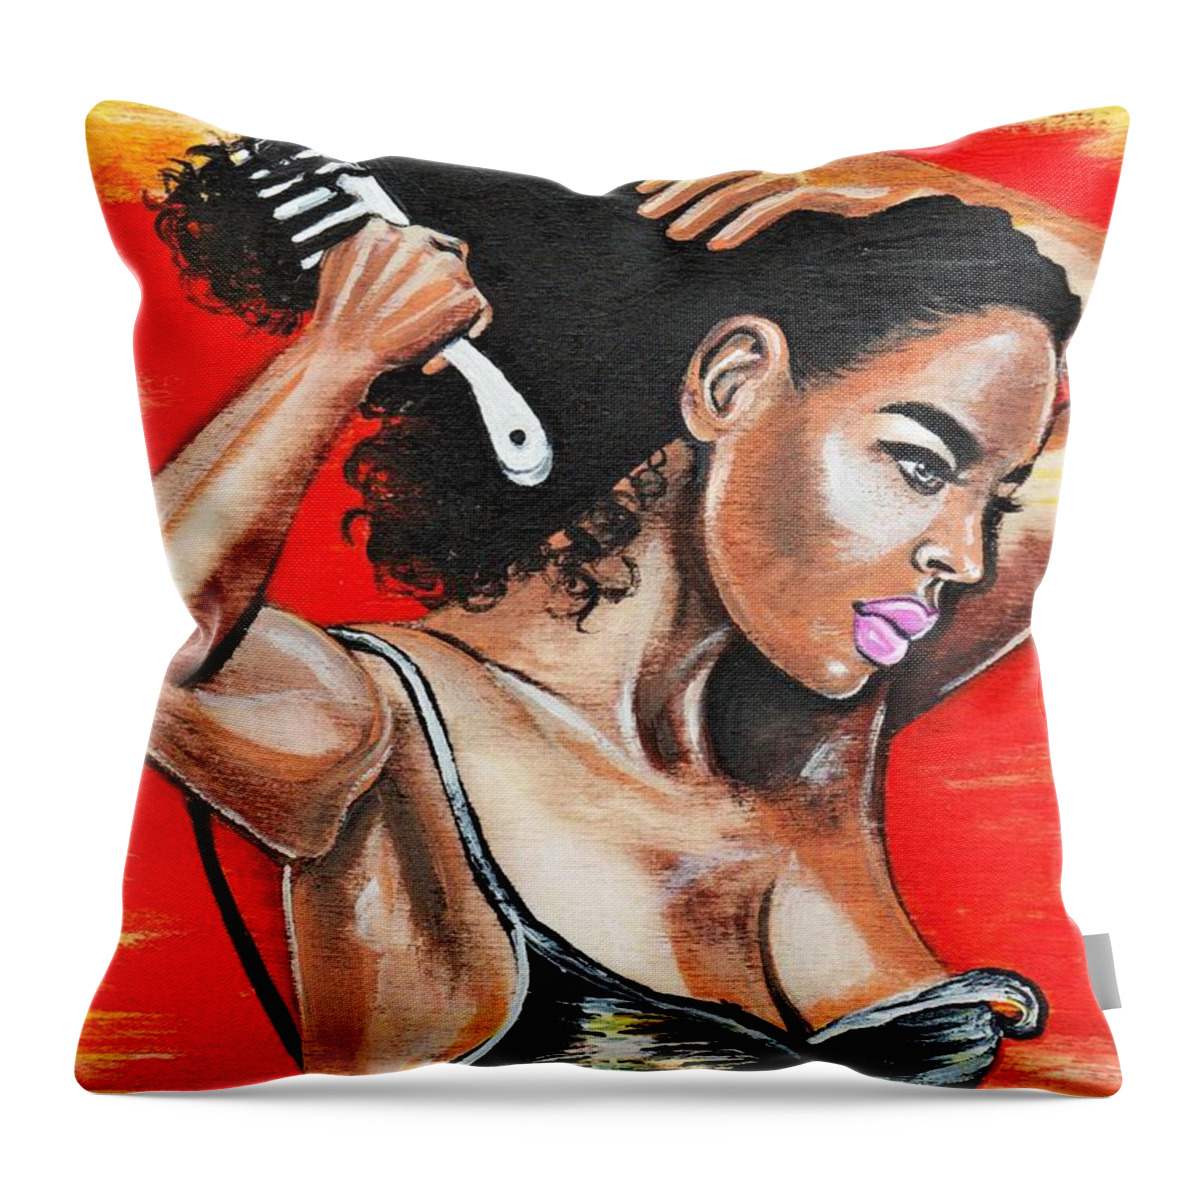 Myhaircrush Throw Pillow featuring the photograph Hot Summer Daze by Artist RiA